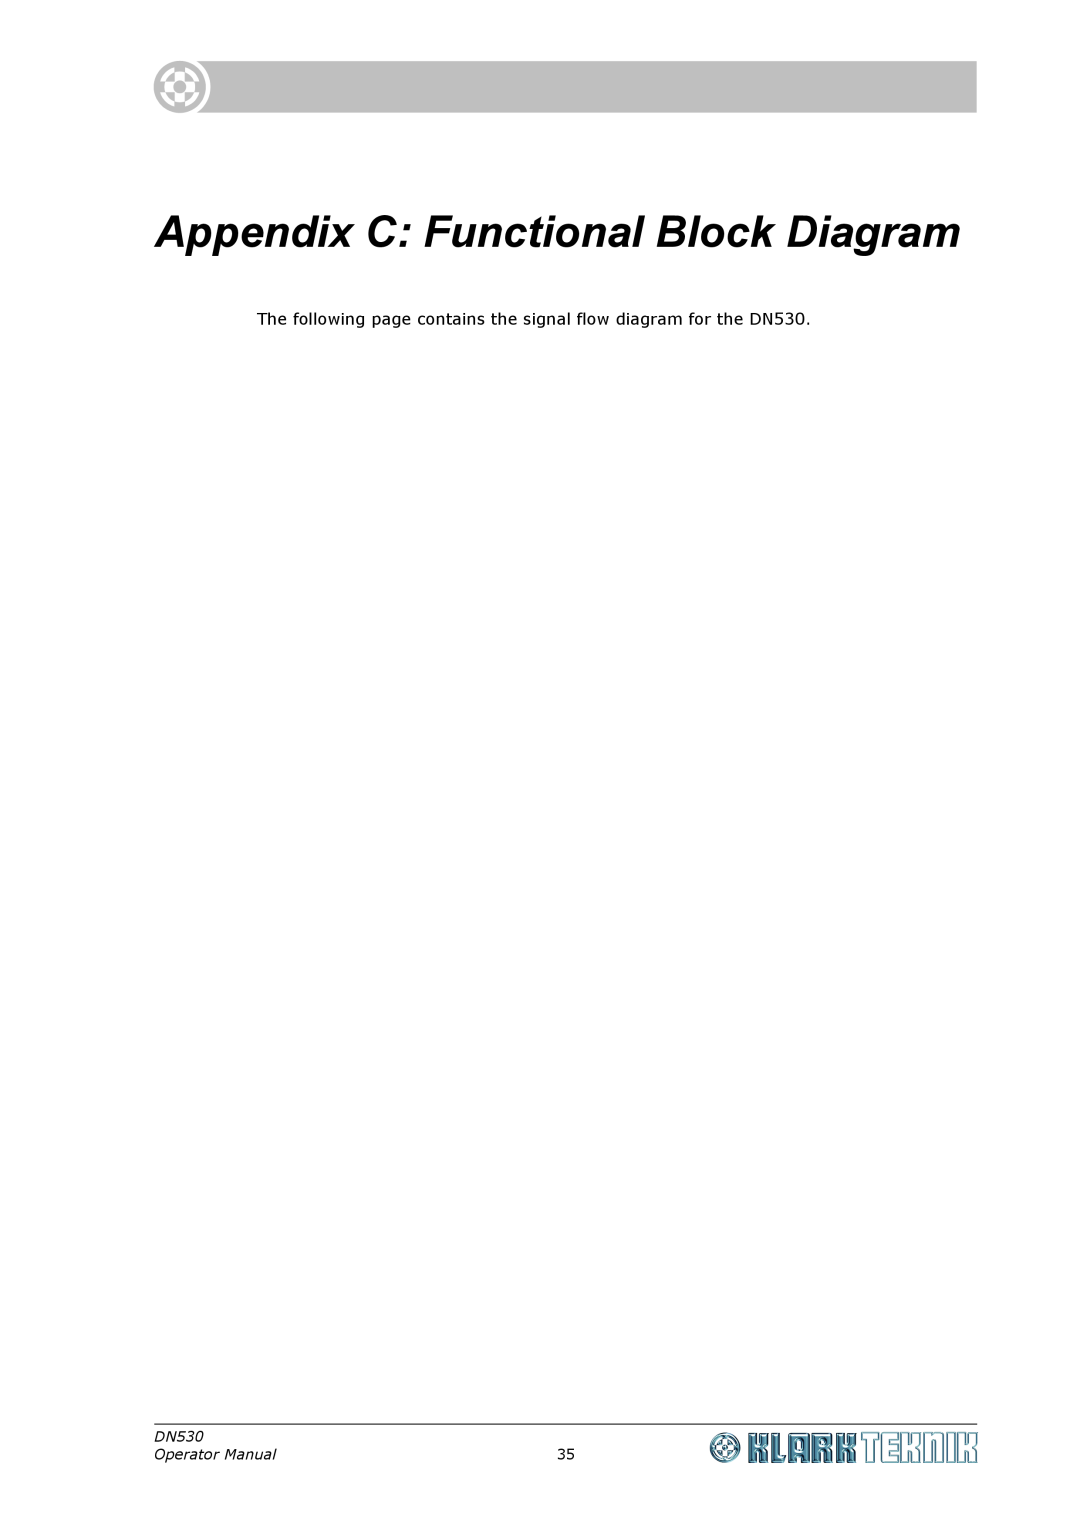 Klark Teknik DN530 specifications Appendix C Functional Block Diagram, Operator Manual 